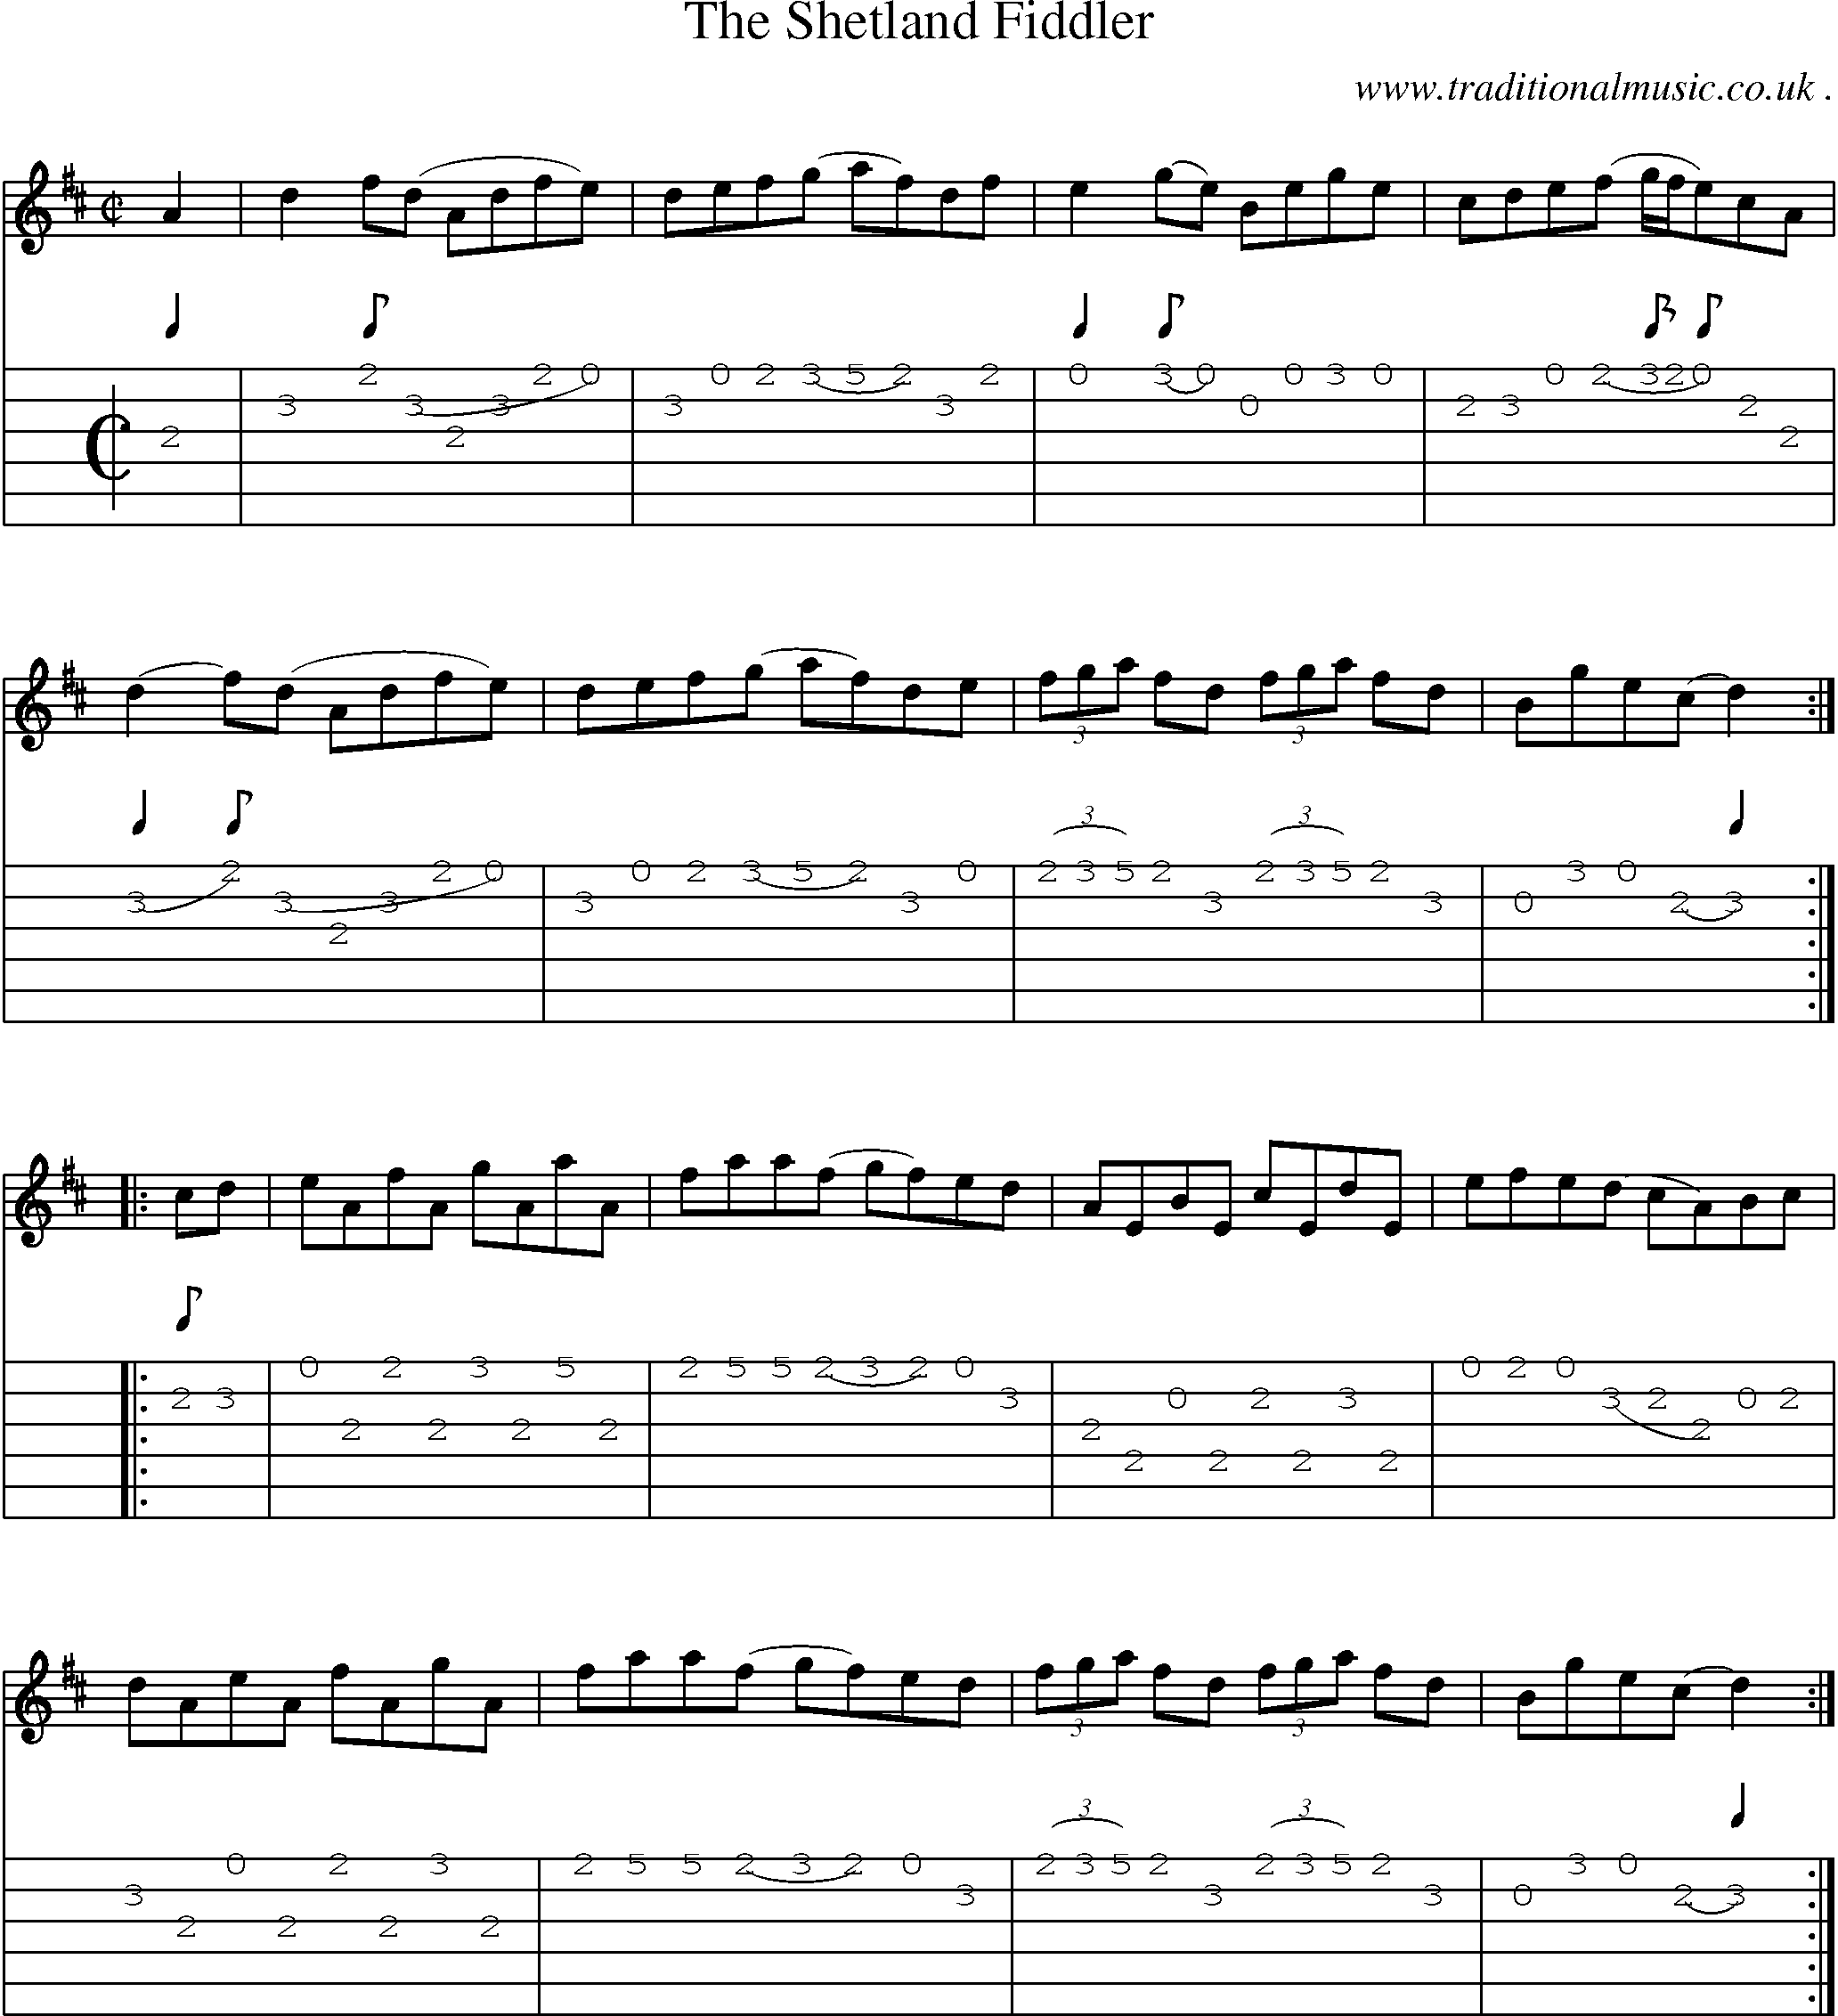 Music Score and Guitar Tabs for The Shetland Fiddler